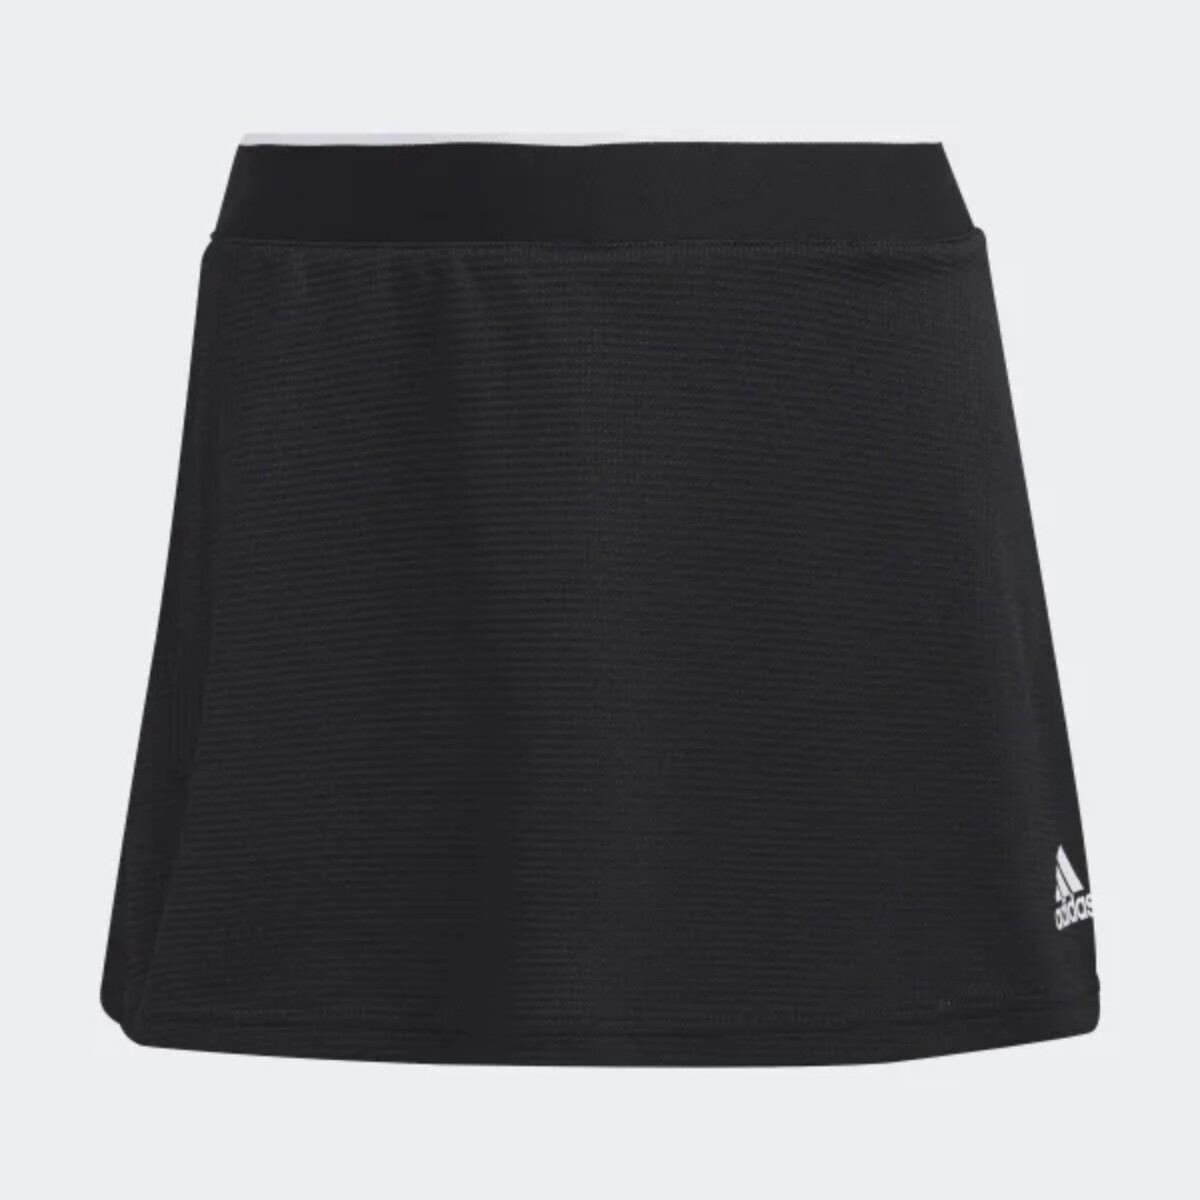 Pollera Adidas Tenis Dama Club Skirt - S/C 